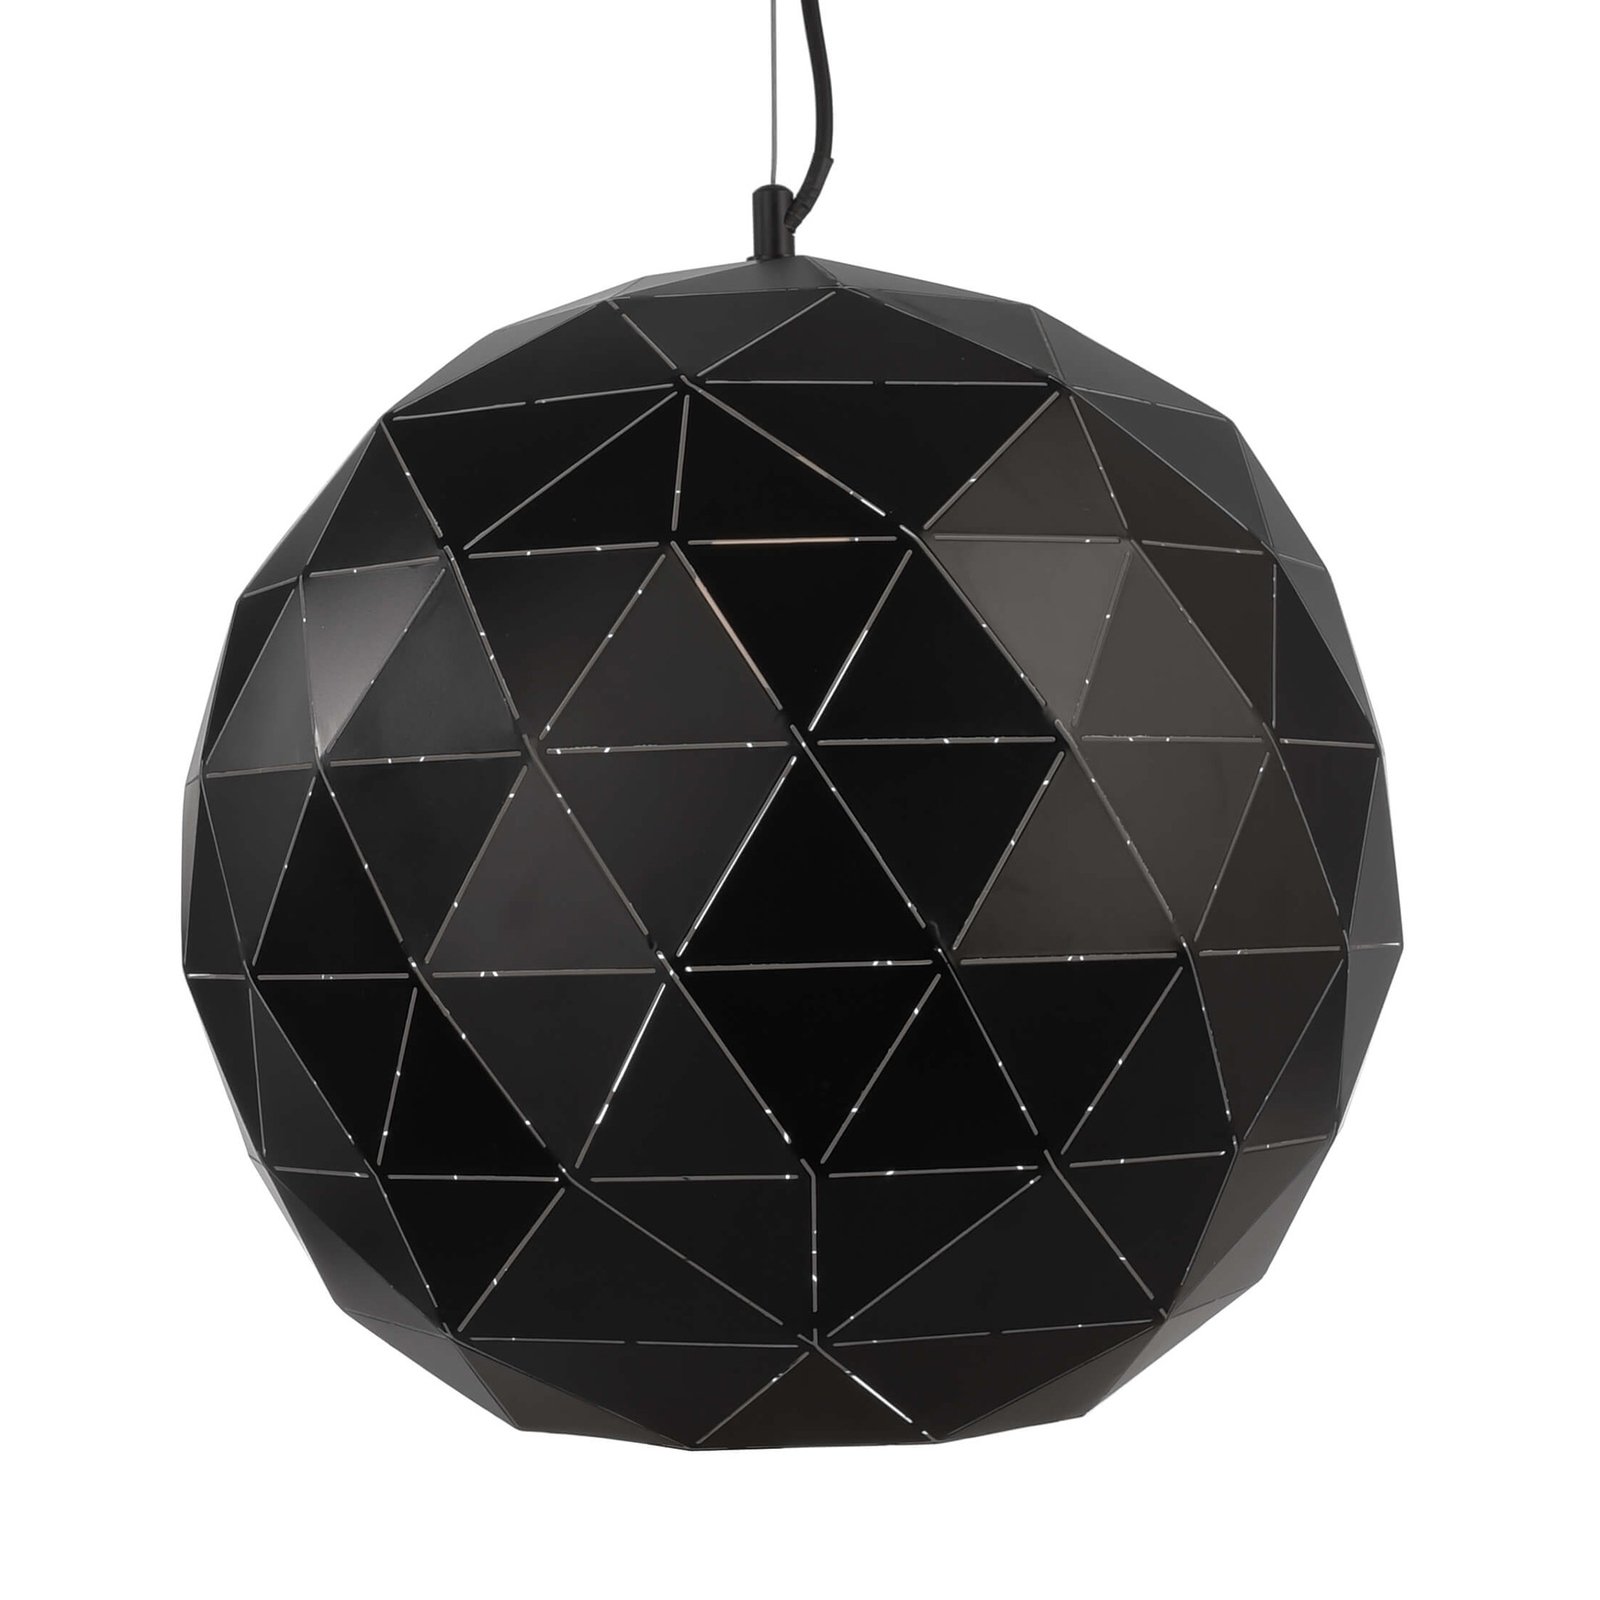 Hanglamp Asterope, Ø 50cm rond, zwart